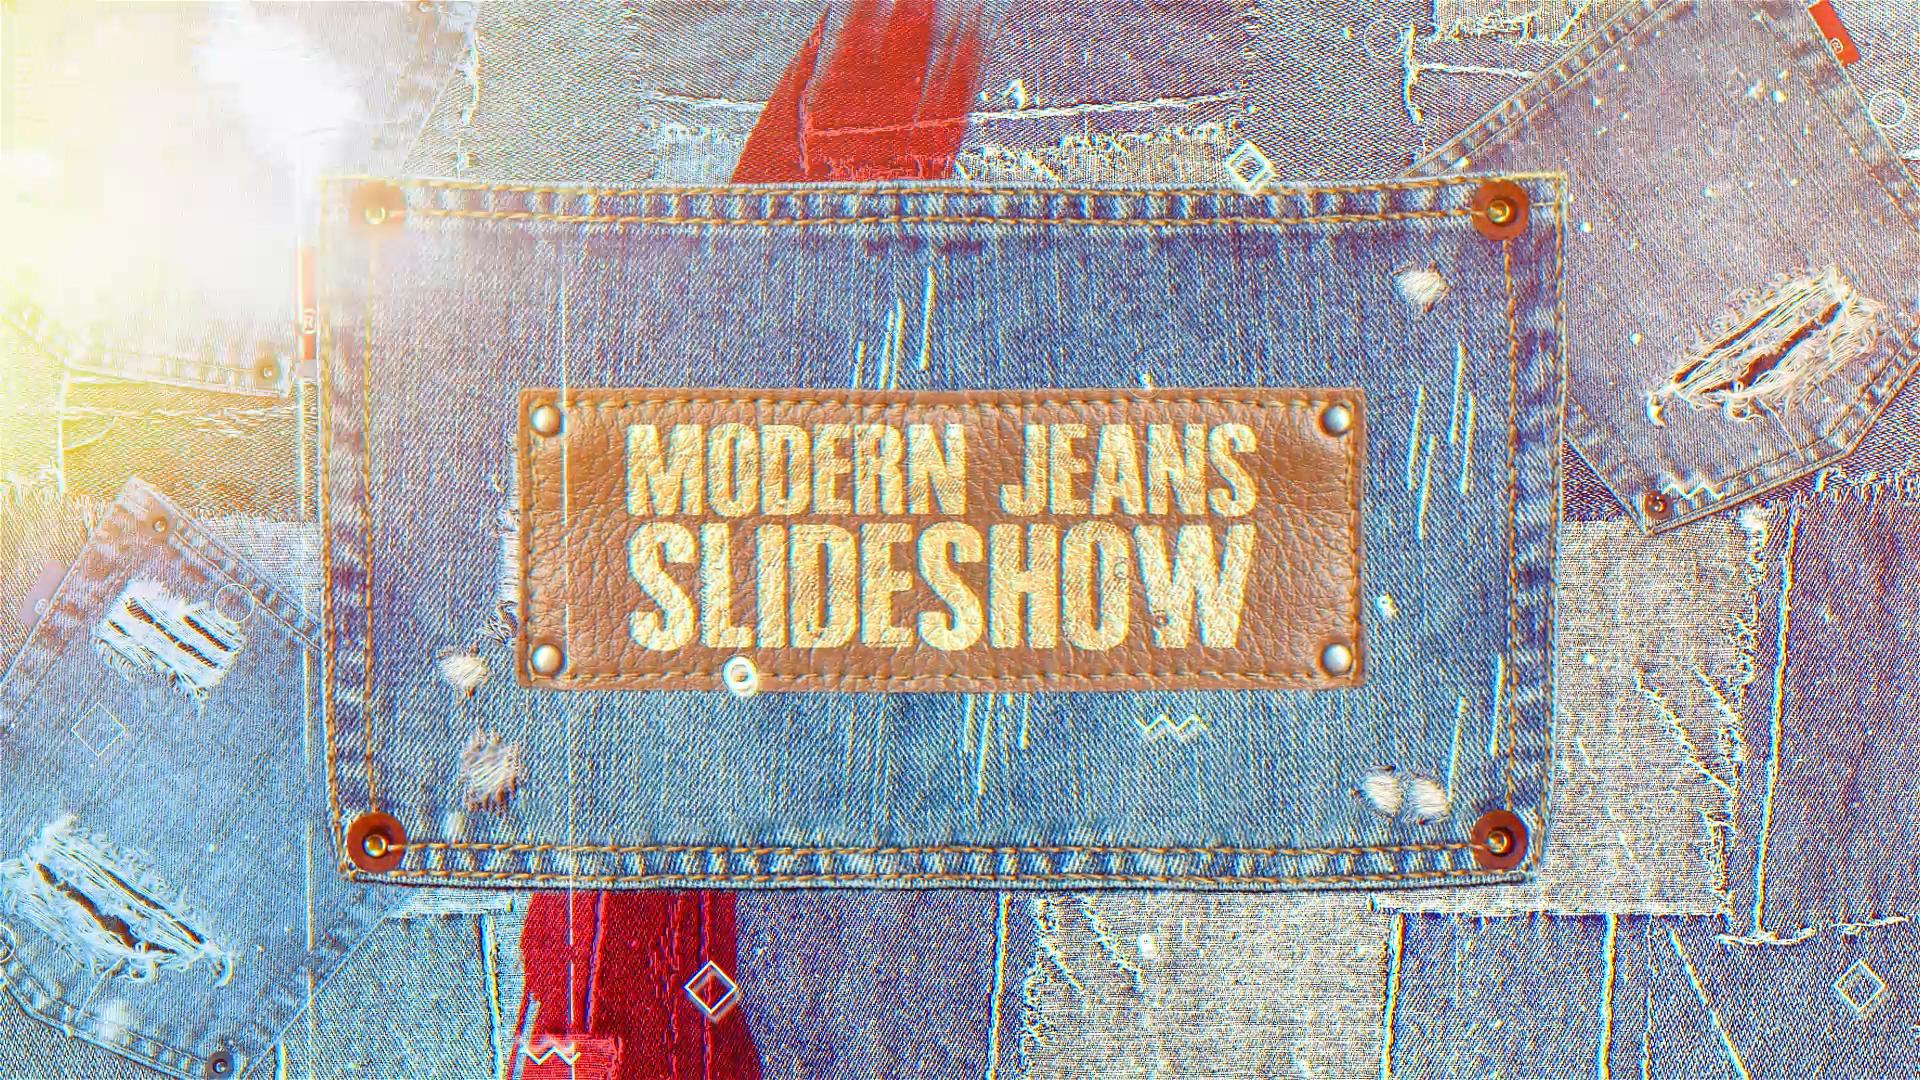 Jeans Slideshow - 1